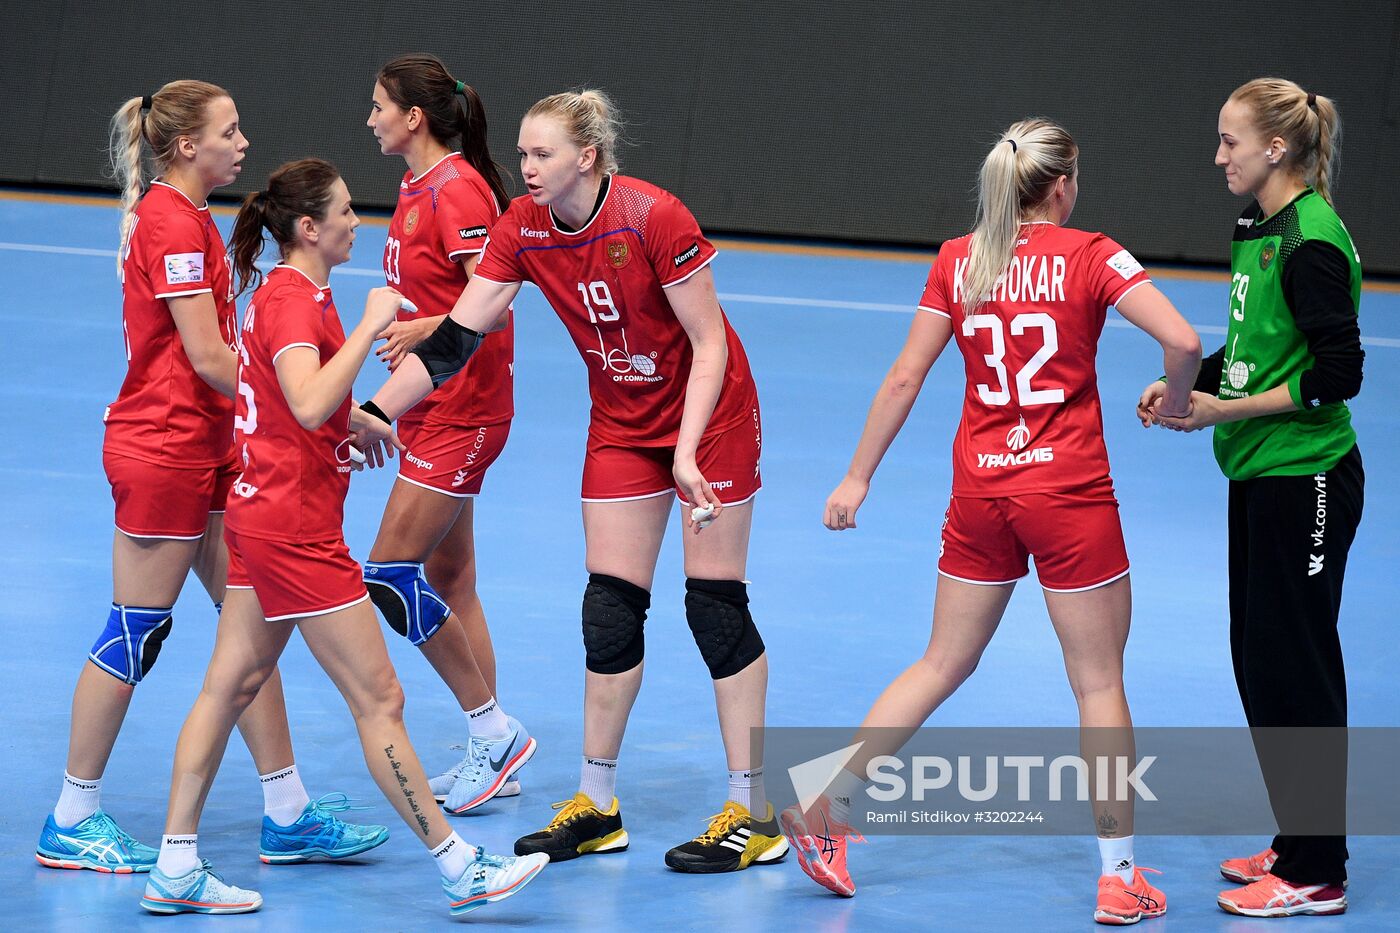 Handball. 2018 European Women's Handball Championship qualification match. Russia vs Portugal